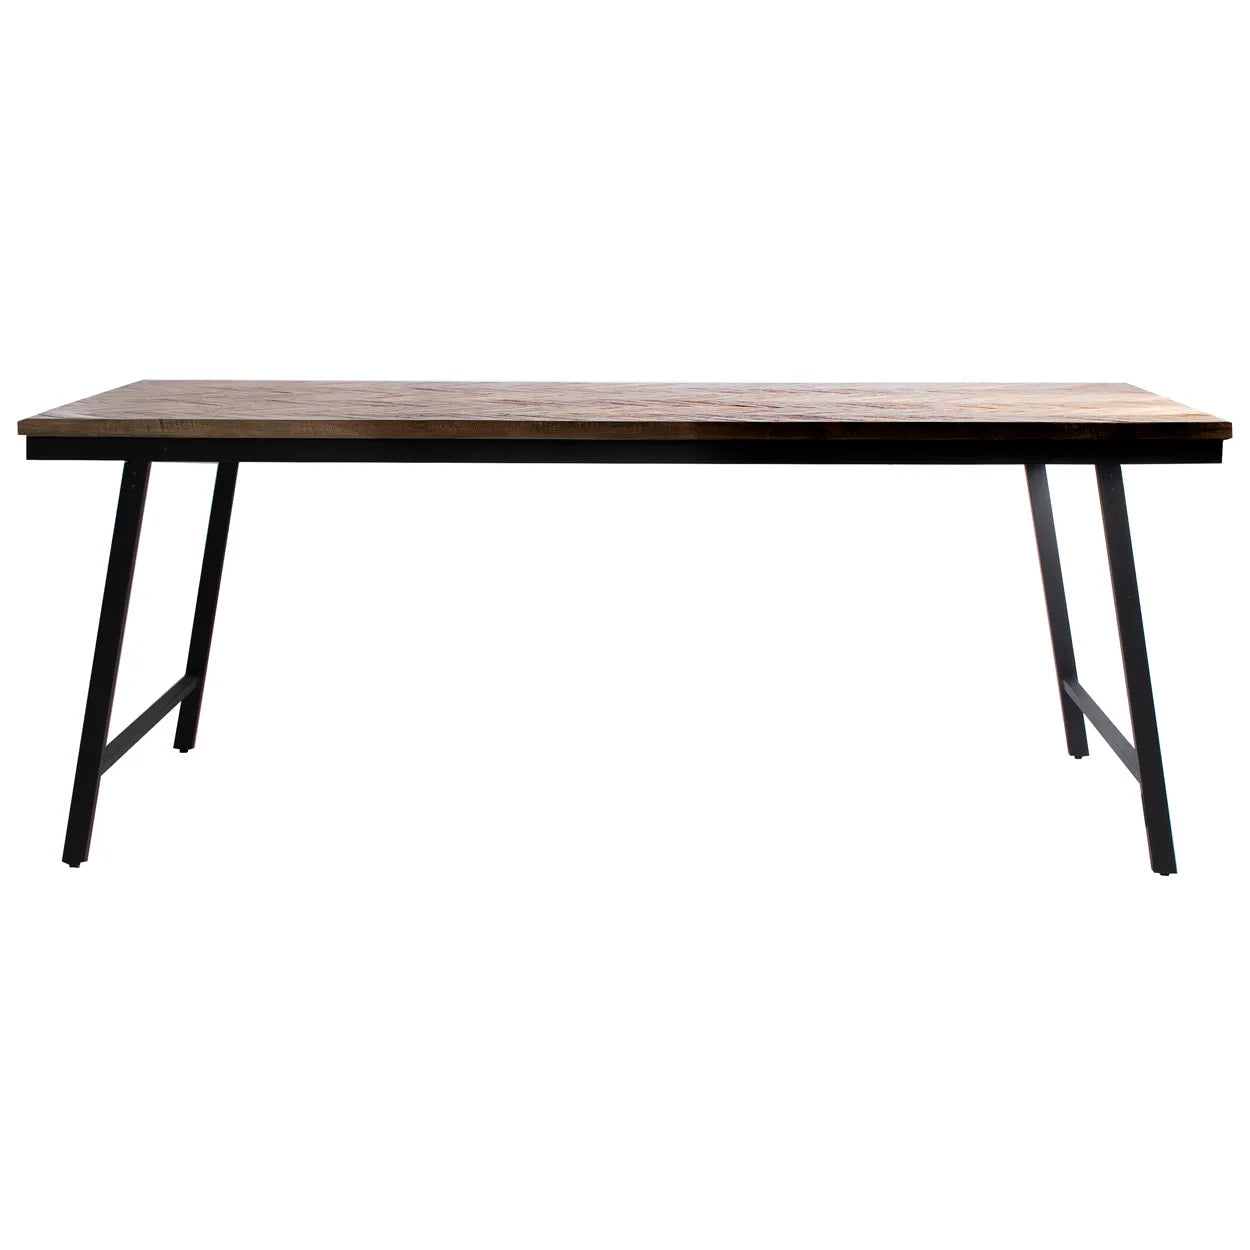 Zahara de la Sierra Elegance Table - Teak Wood and Iron Table